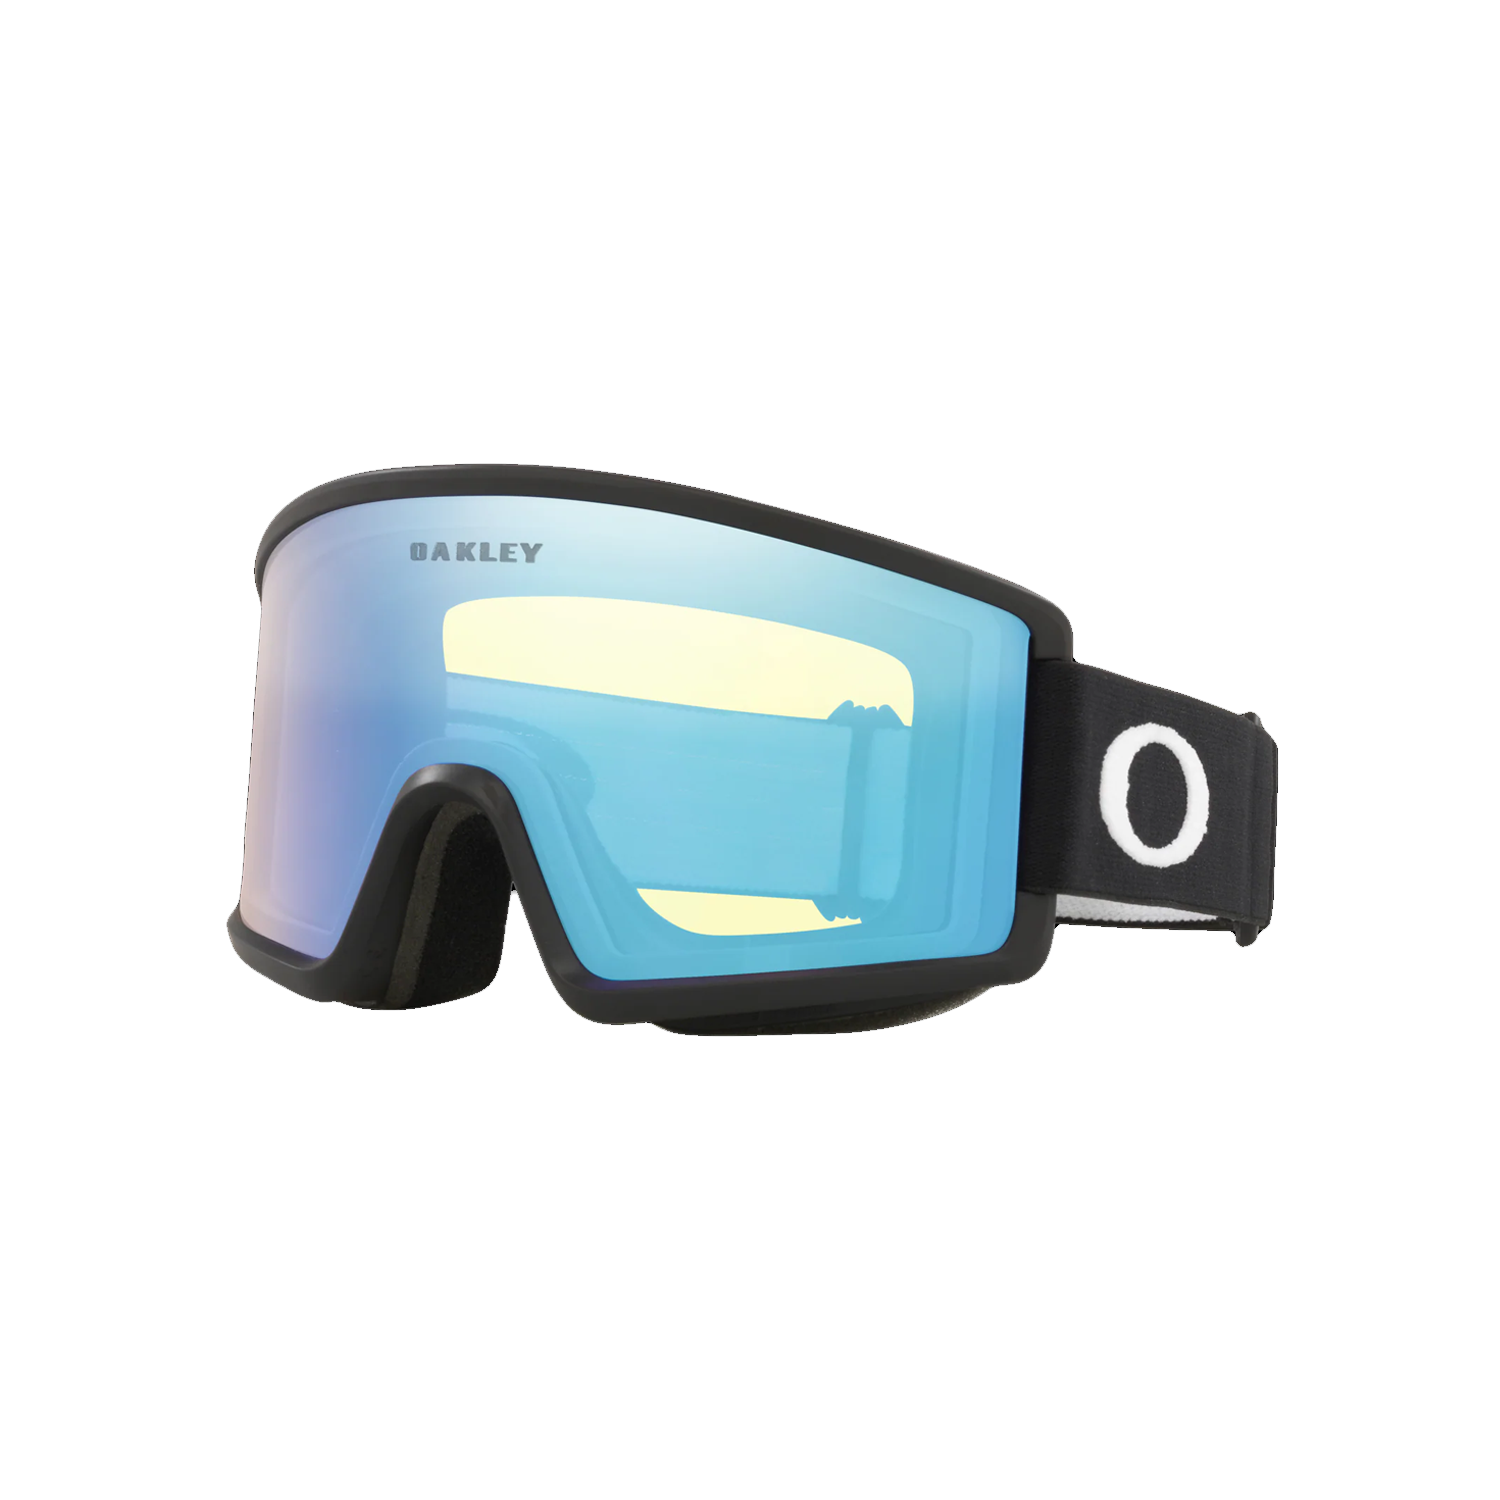 Oakley Target Line L Goggles Matte Black/HI Yellow Iridium + Dark Grey